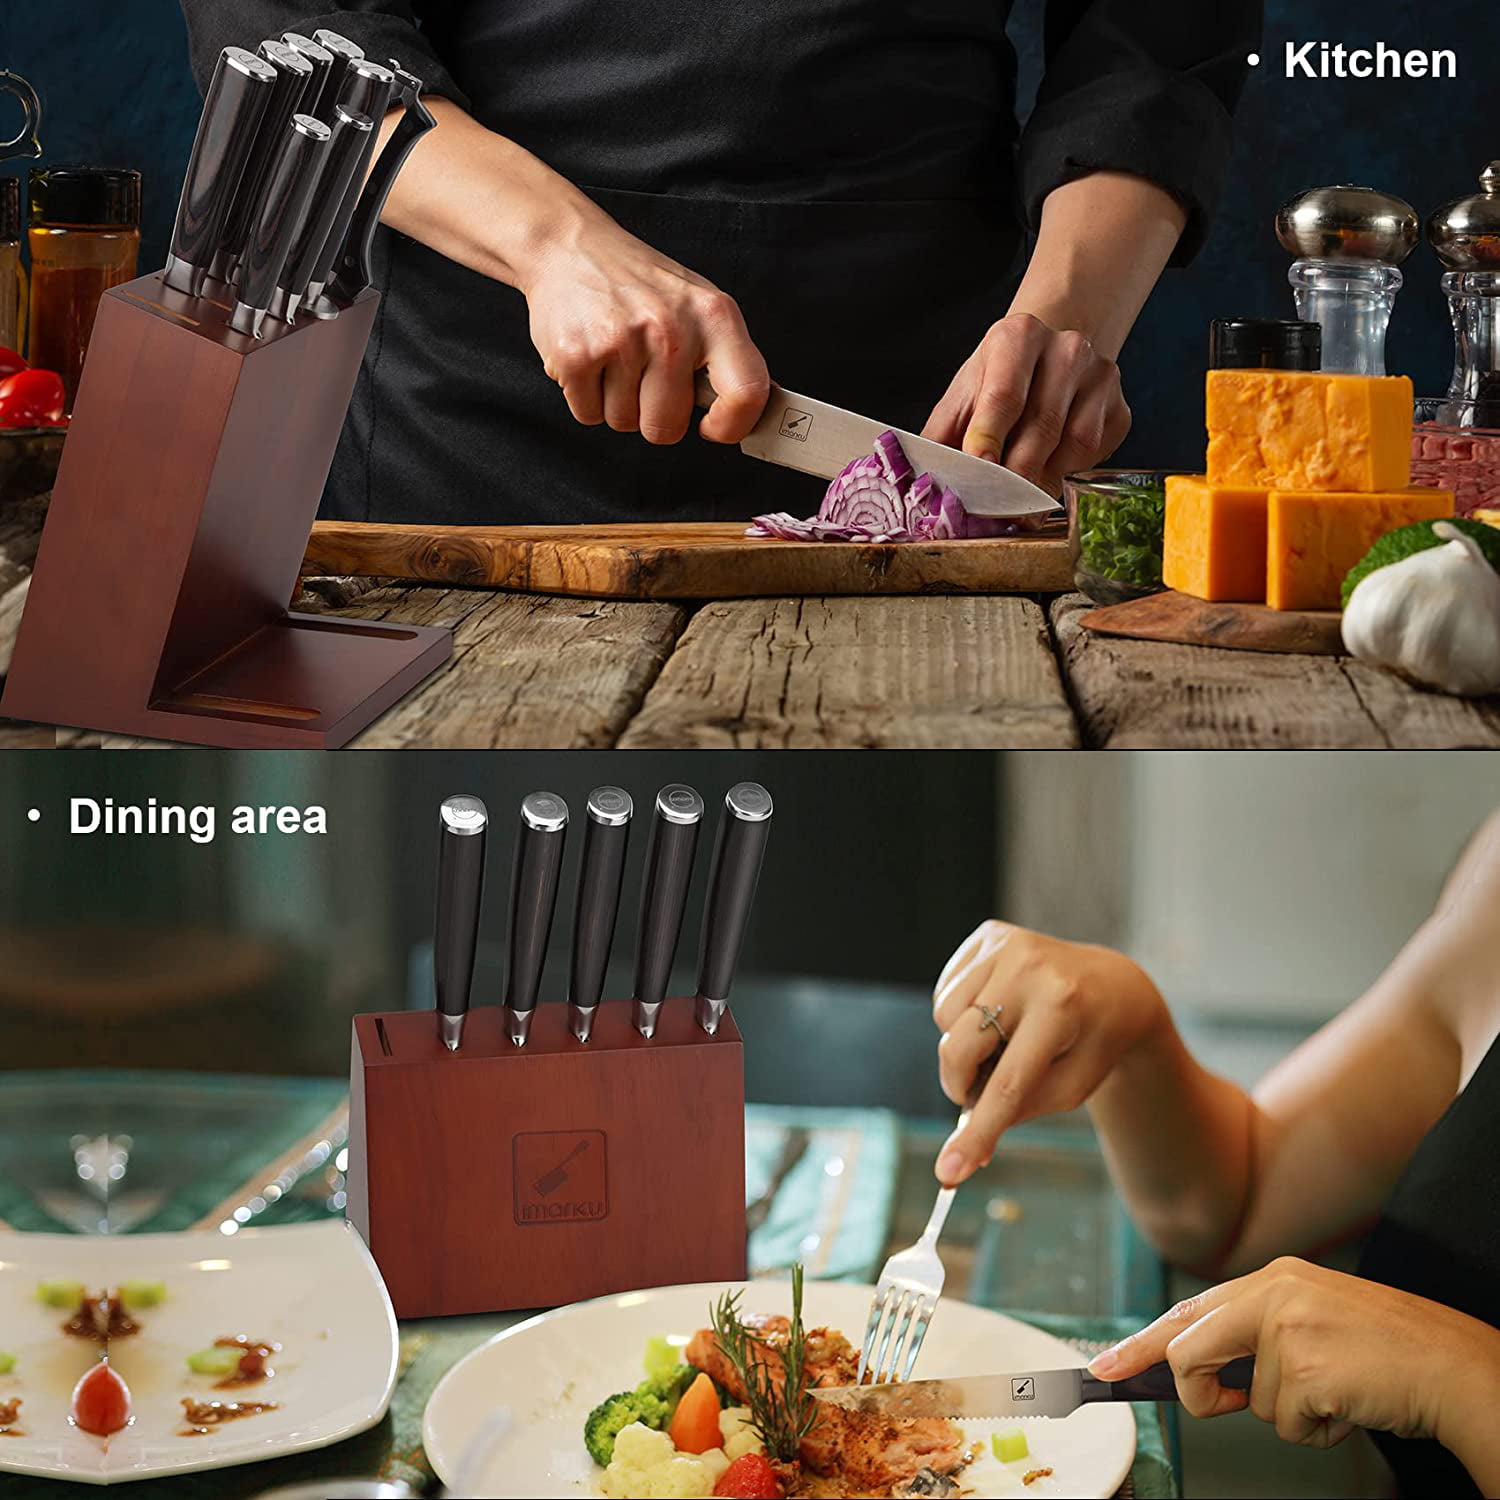 Set, imarku 16-Piece Premium Kitchen Knife Set, Ultra Sharp